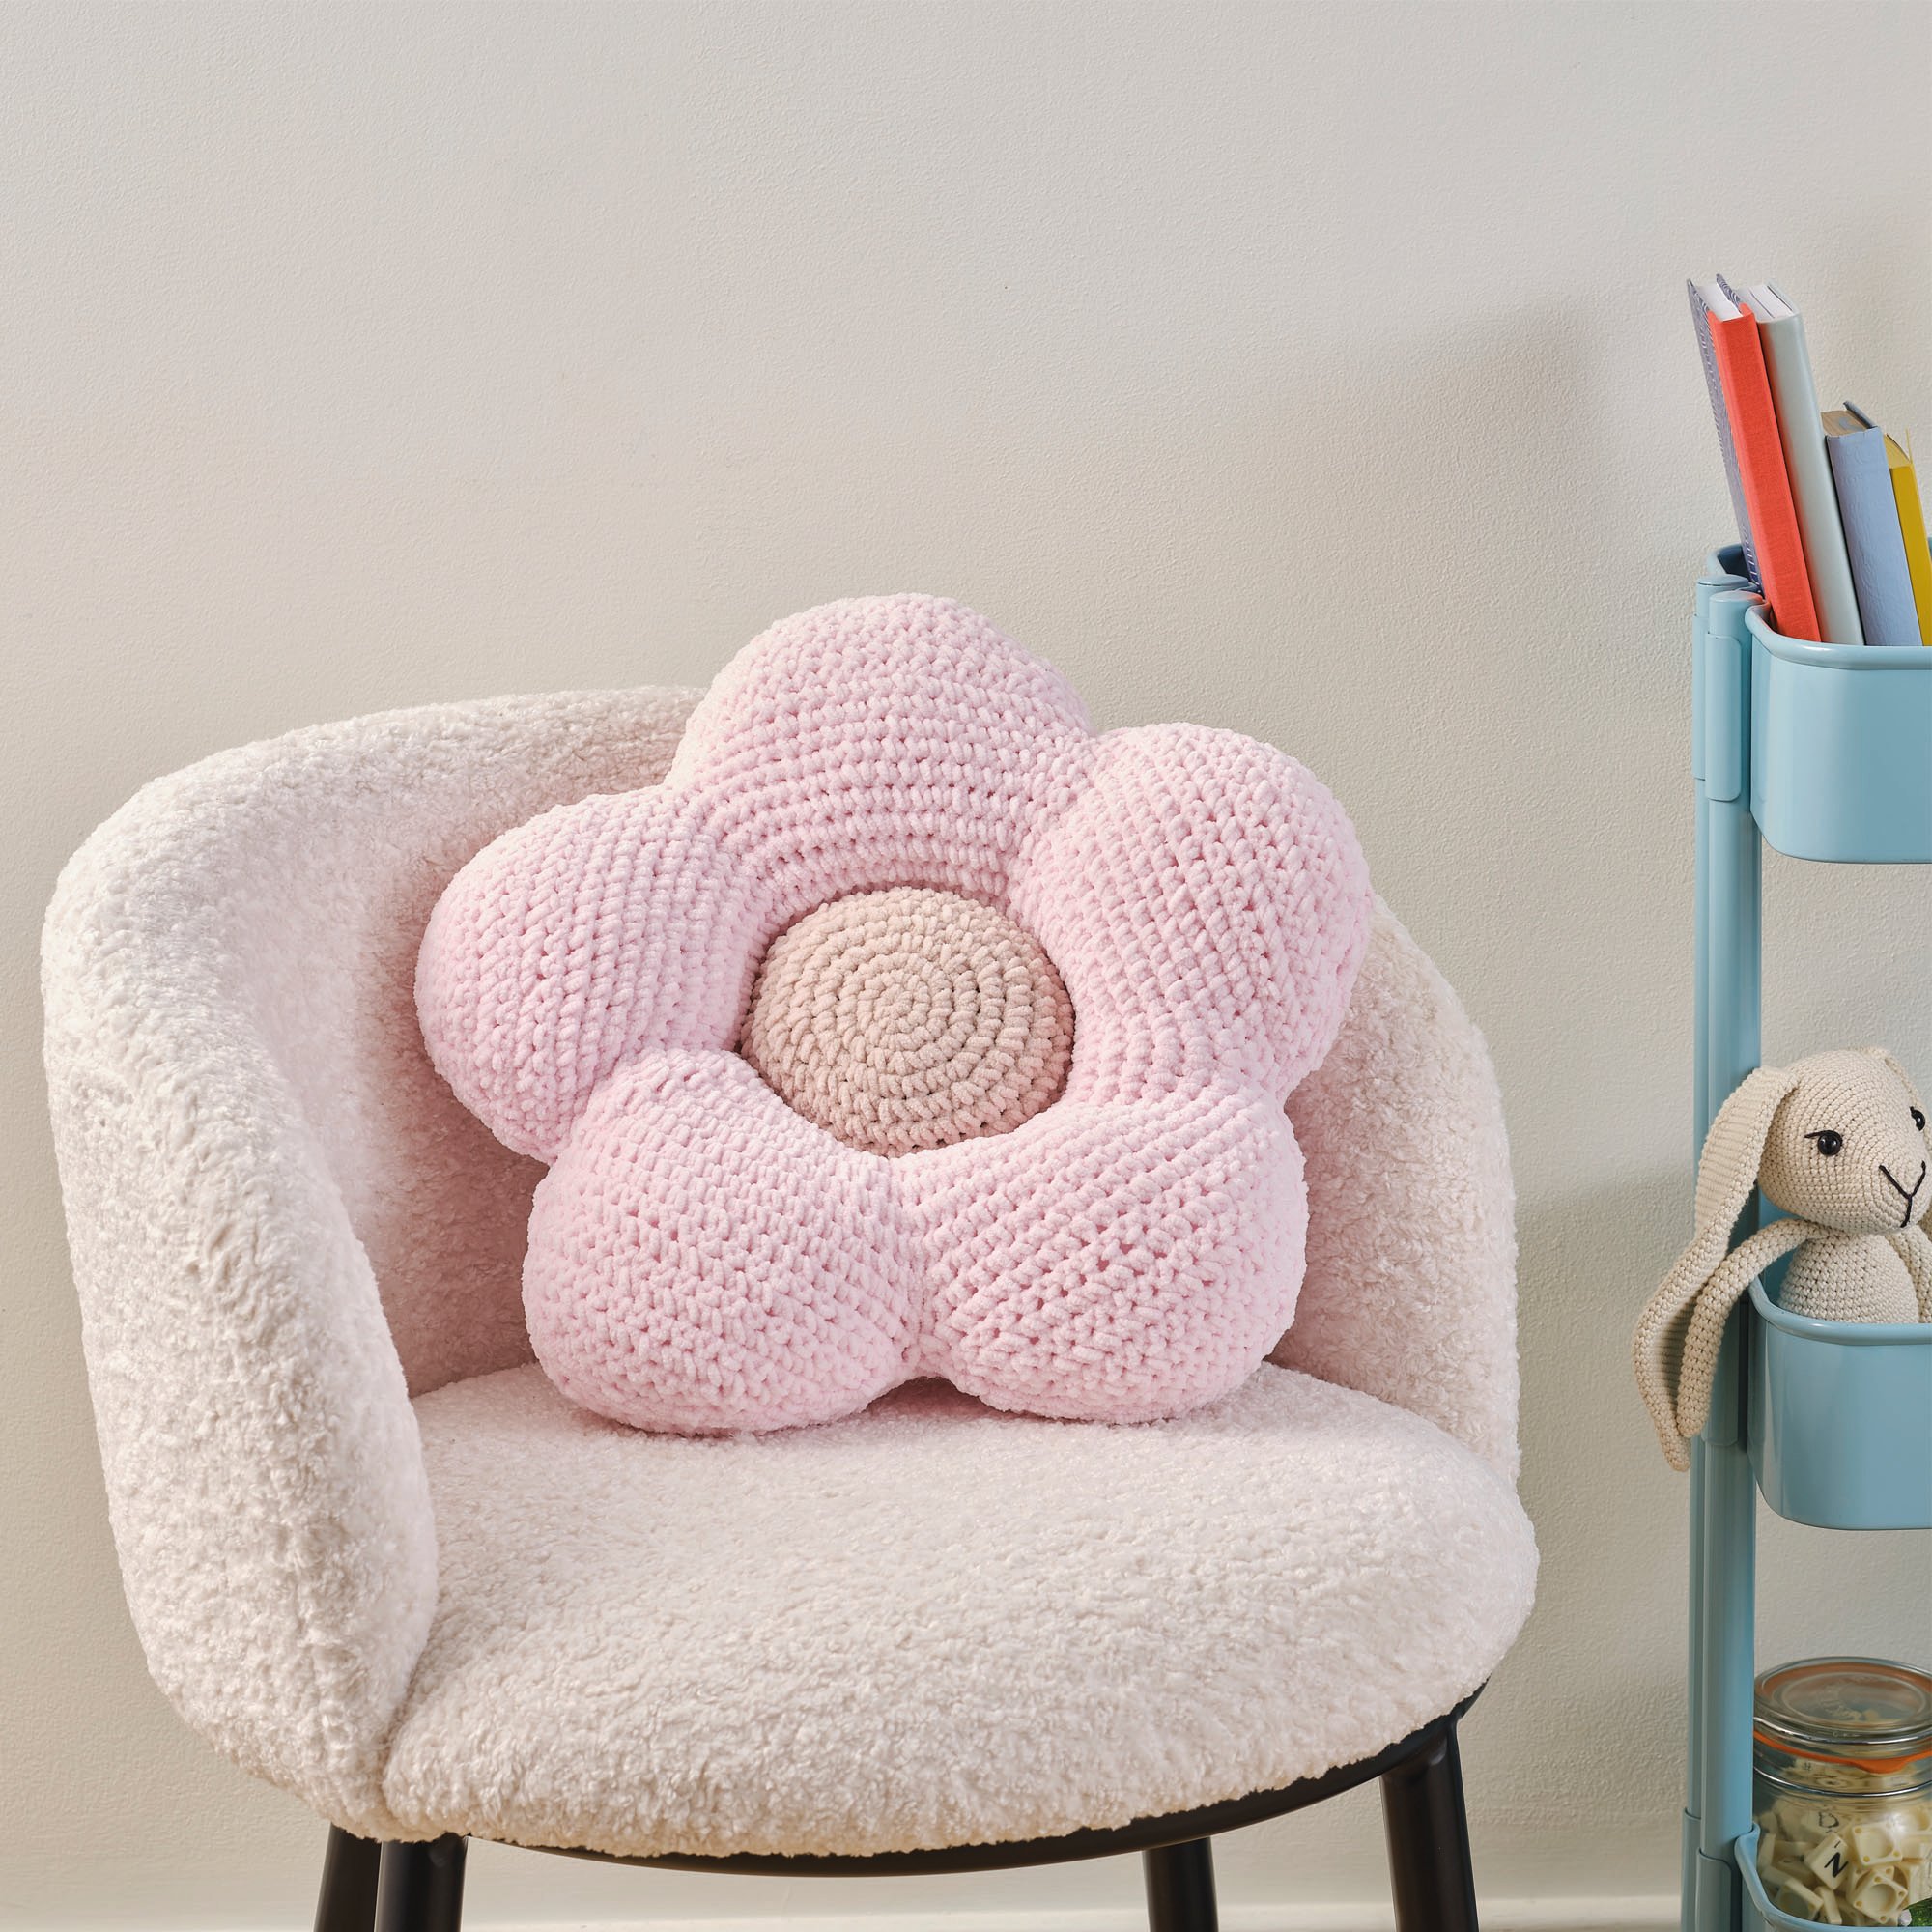 How to Crochet a Plush Flower Cushion